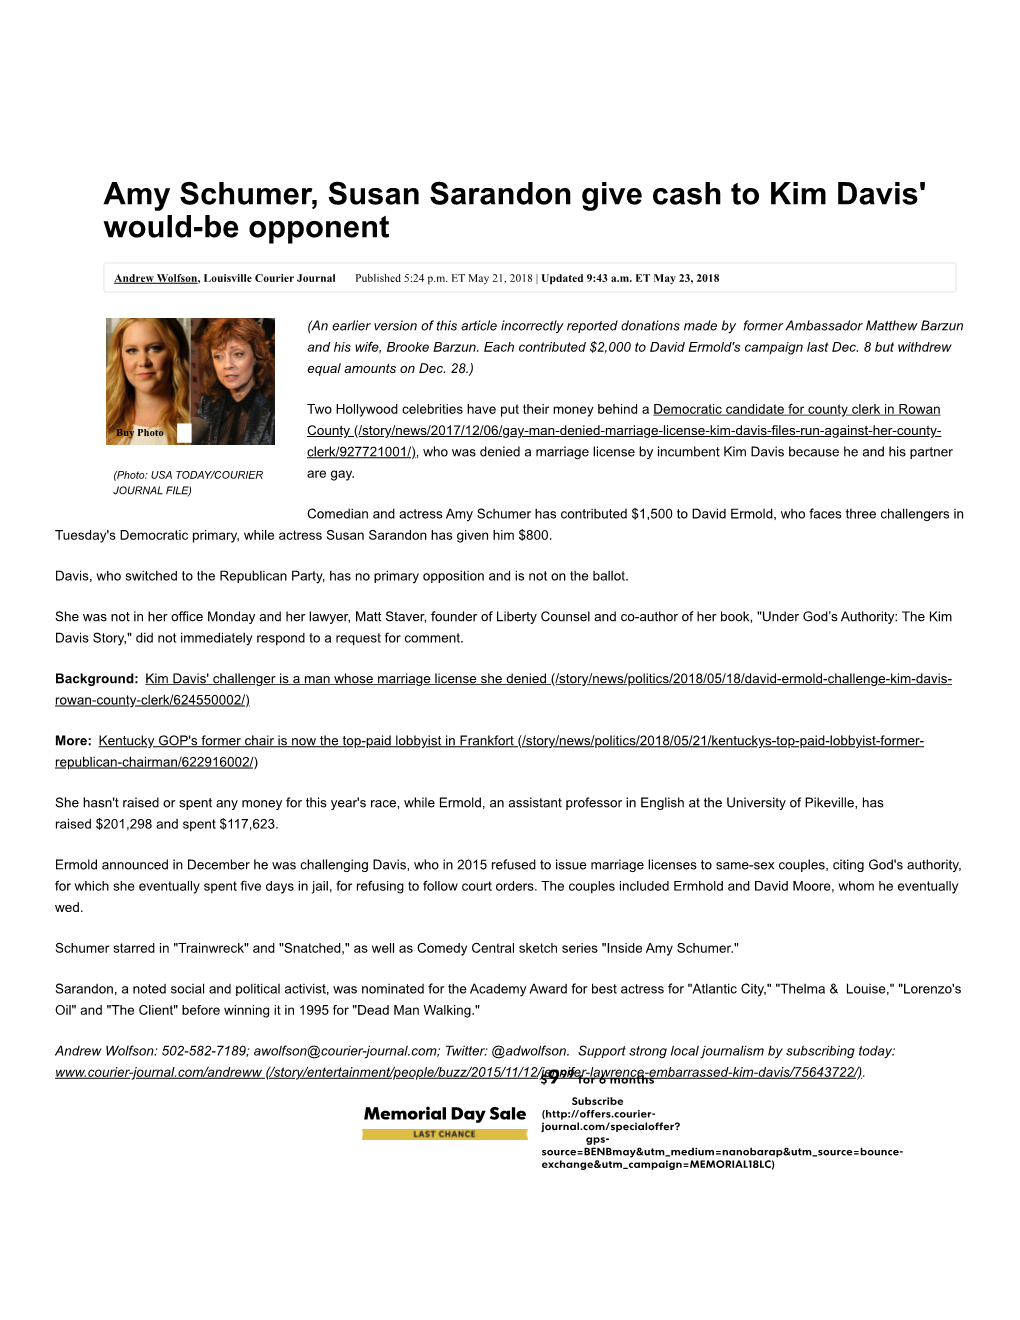 Amy Schumer, Susan Sarandon Give Cqsh to Kim Davis' Would-Be